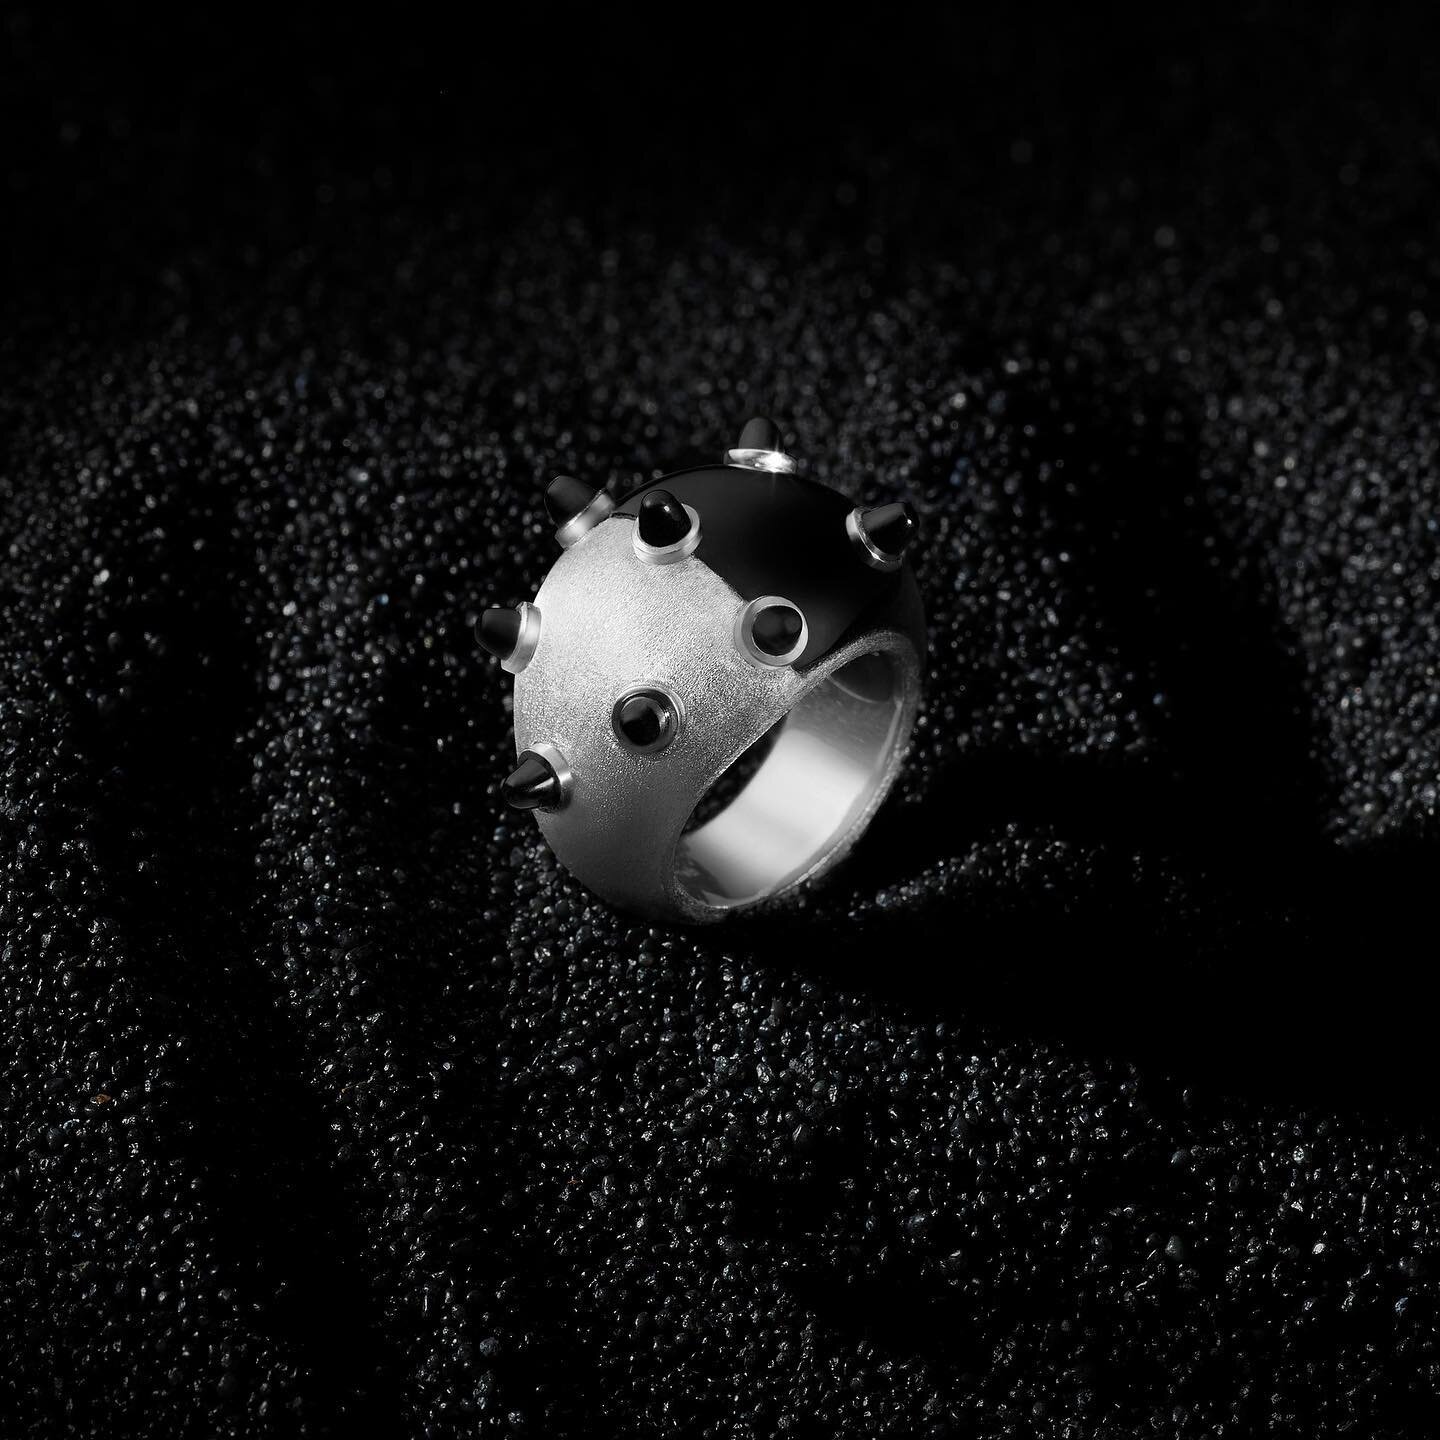 Sputnik ring shot for @AspreyLondon⁠⠀
⁠⠀
#photography #storyteller #studiophotography #jewellery #finejewellery #diamonds #bondstreet #luxury #modernjewellery #sparkleseason #comissioned #commercial #AOP #jewelrydesigner #jewellrylover